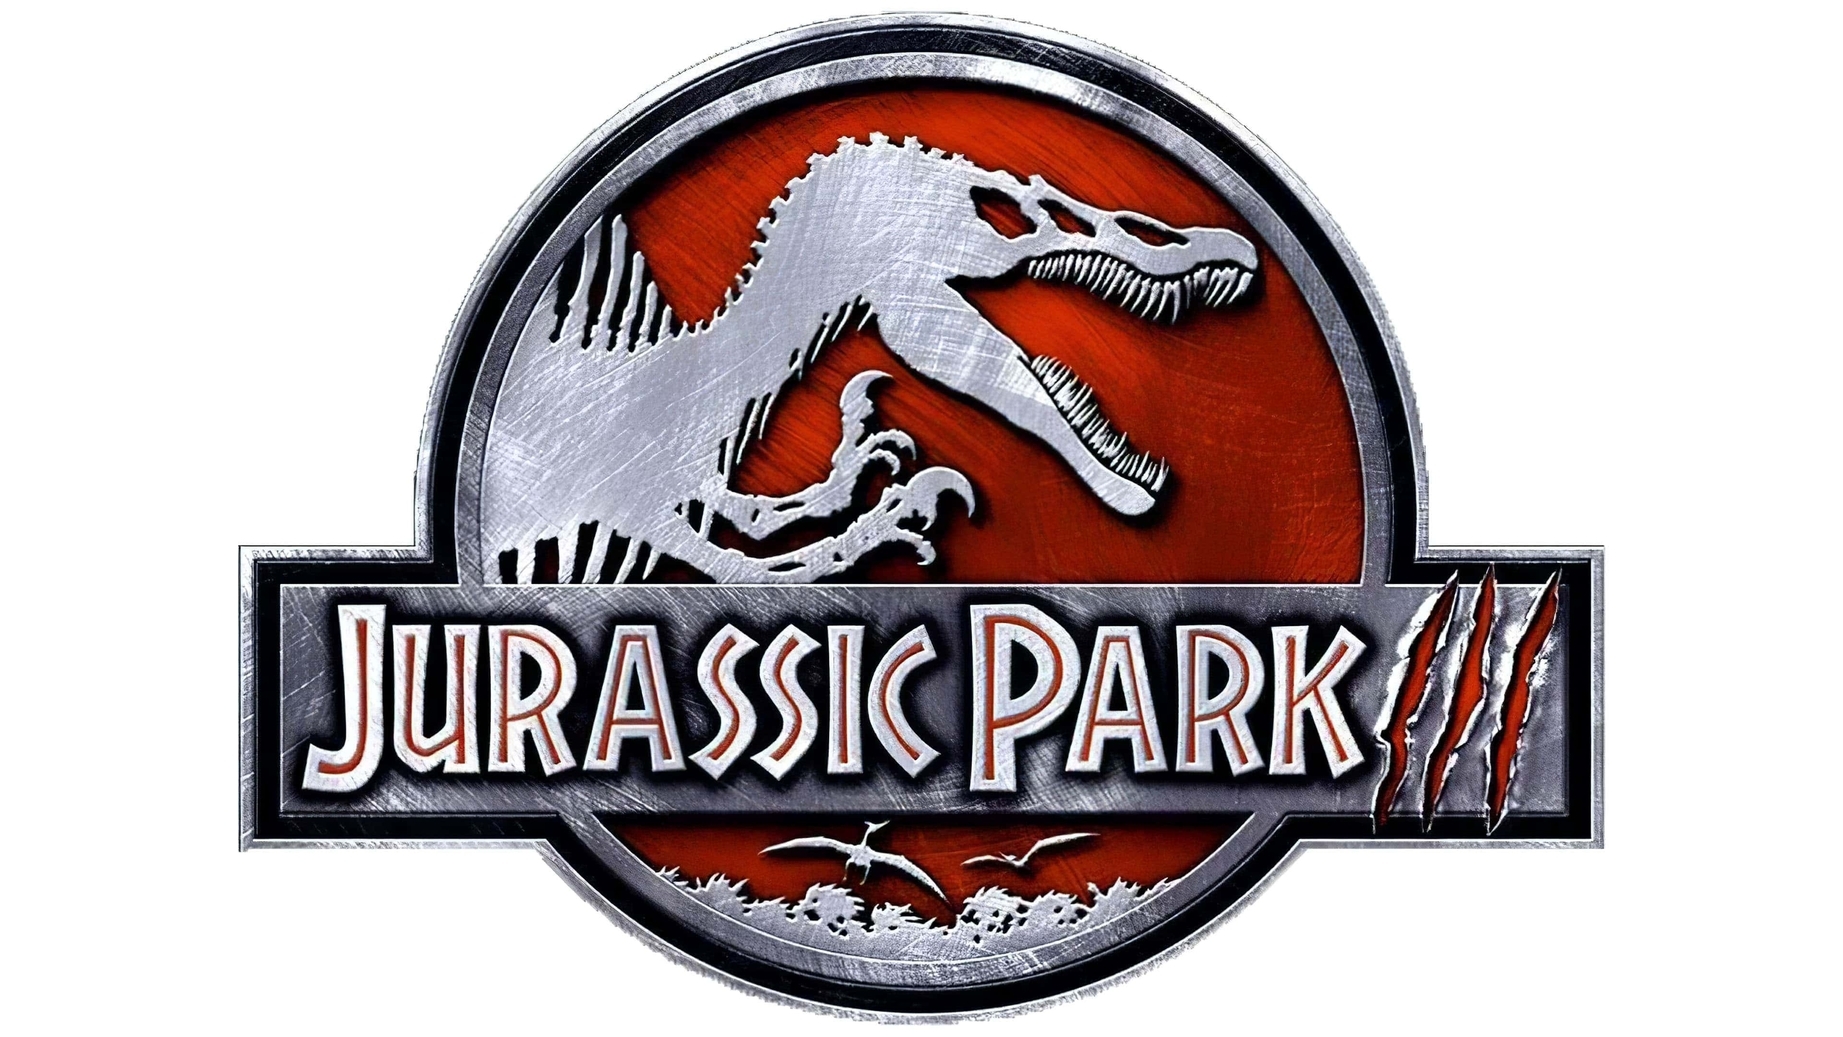 Jurassic park sign 2001